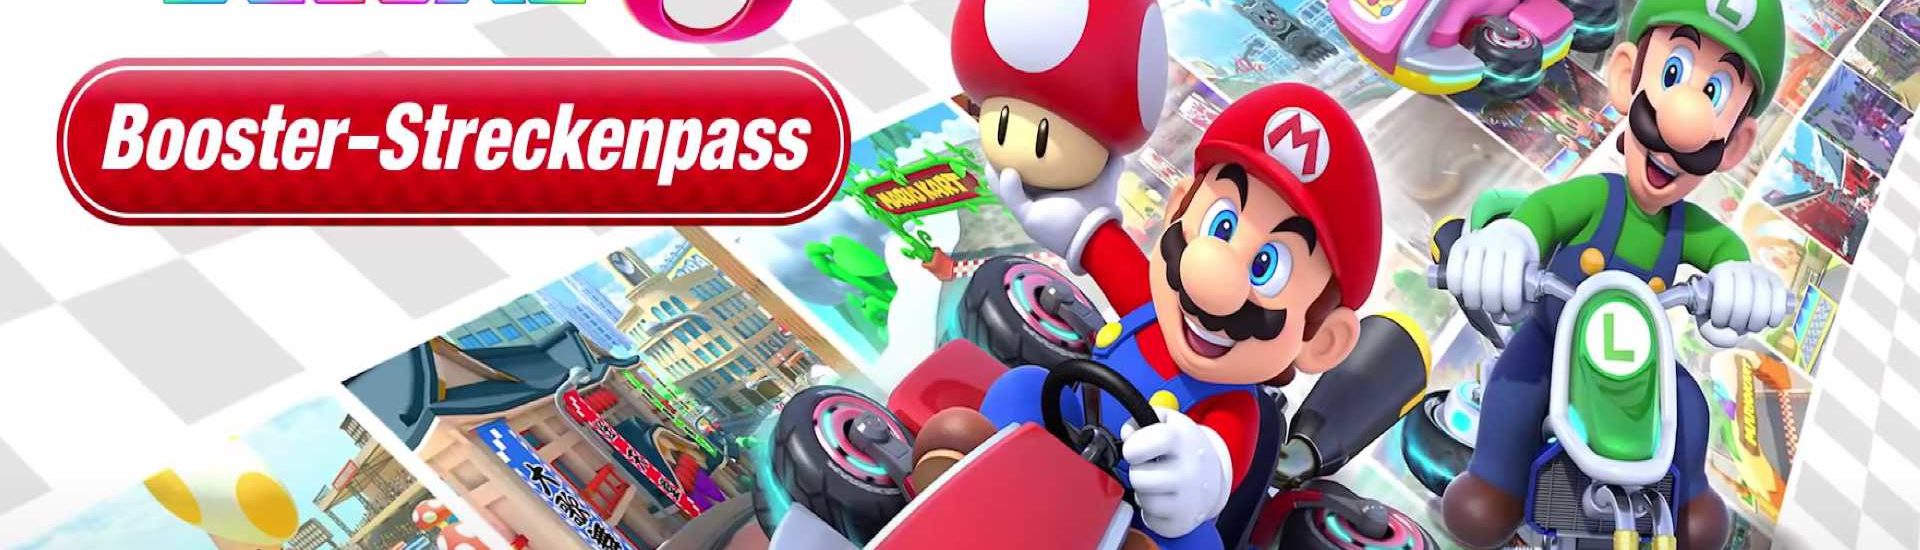 Mario Kart 8 Deluxe - Booster-Streckenpass (Switch) Test